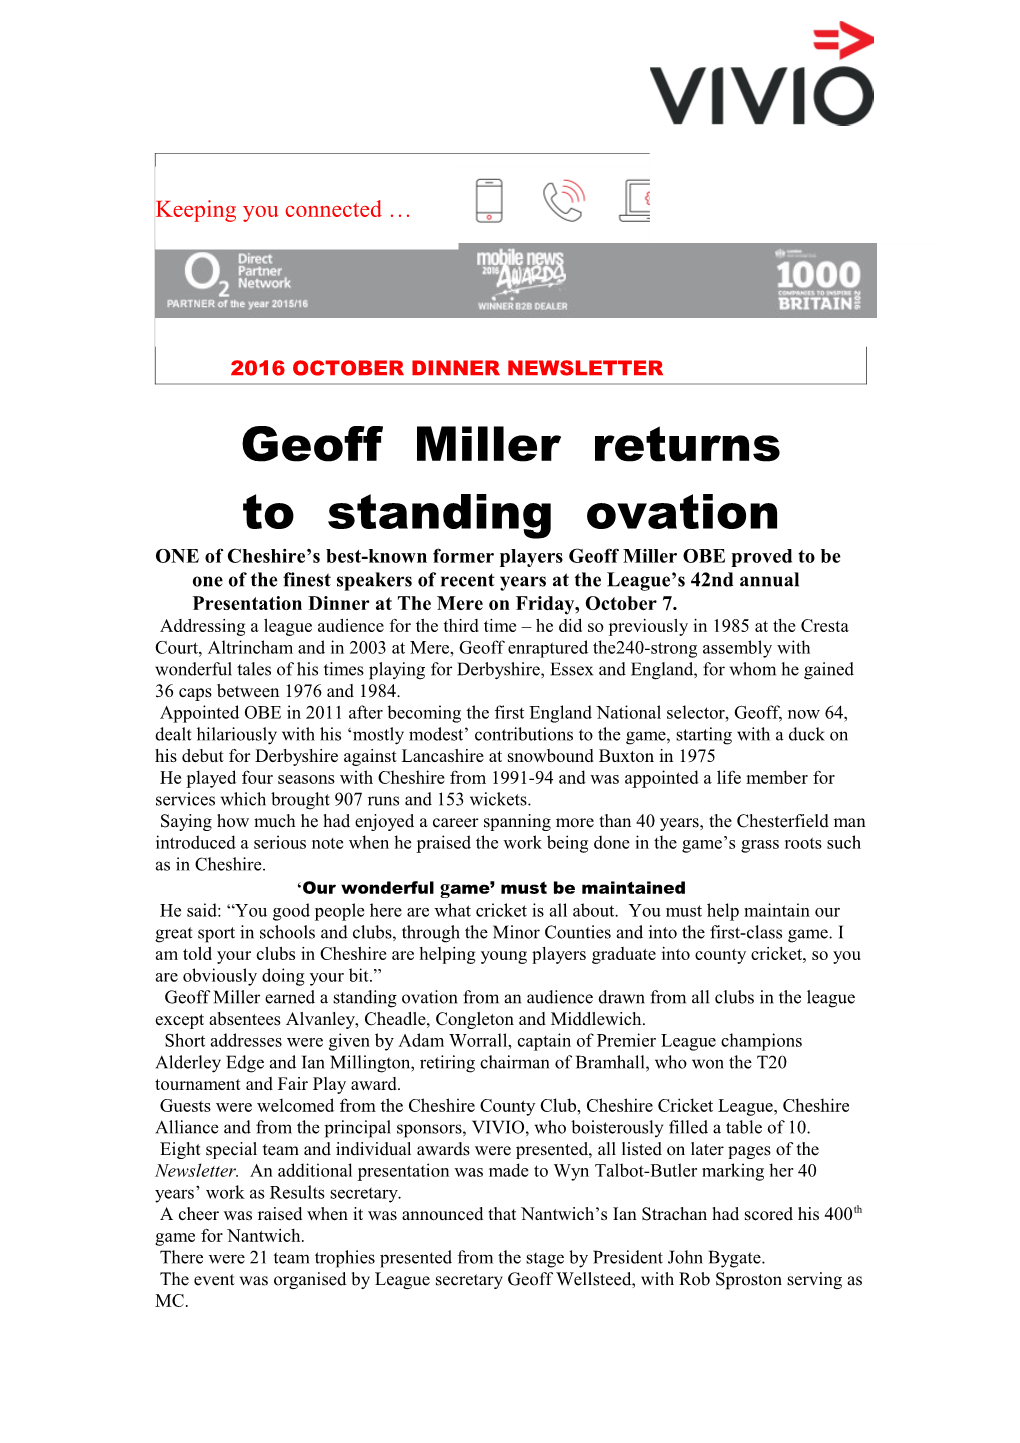 Geoff Miller Returns